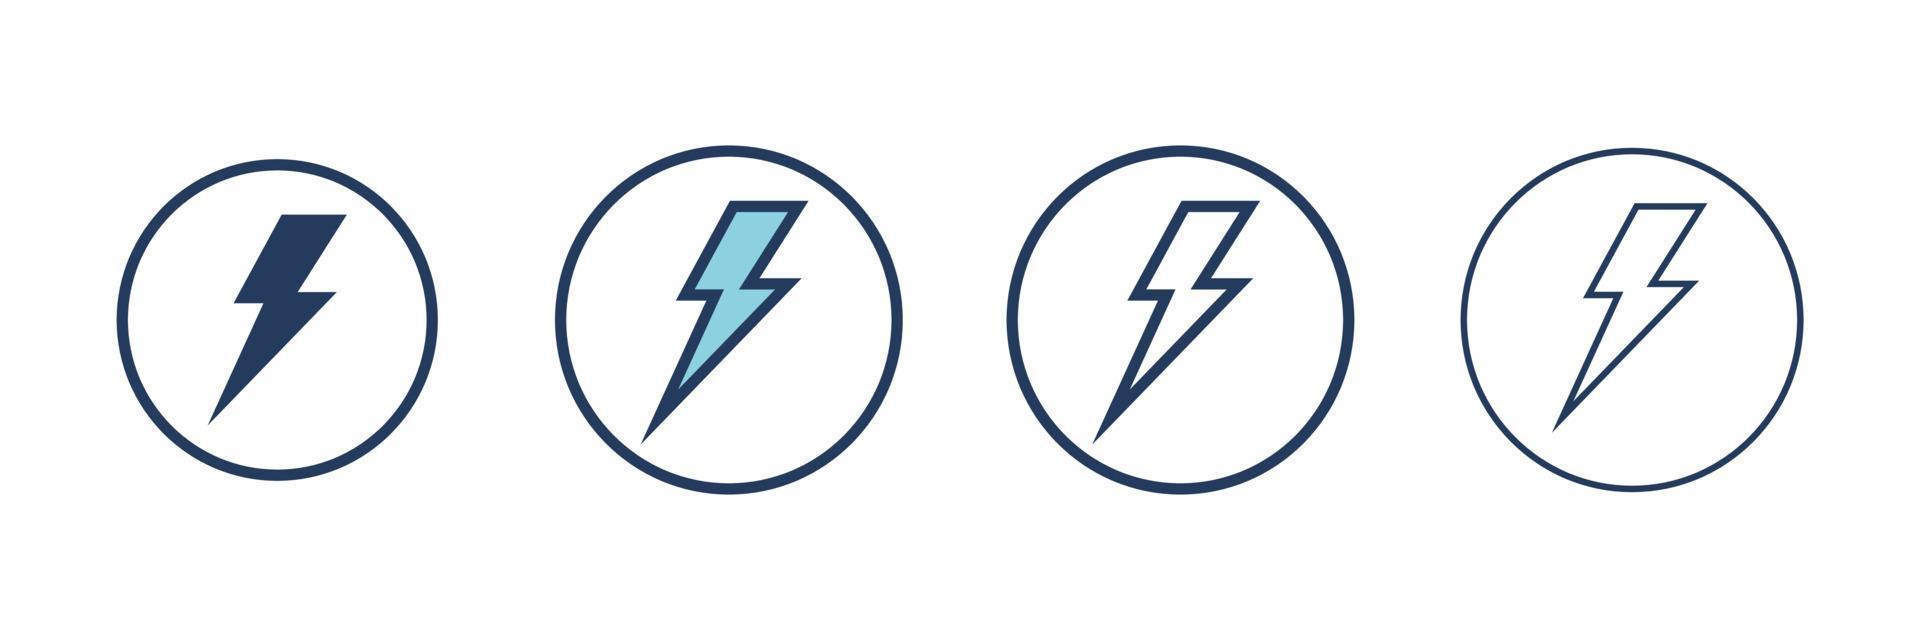 conjunto de ícones de eletricidade. conjunto de símbolo de vetor de energia. sinal de estilo preenchido e linear para conceito móvel e web design.